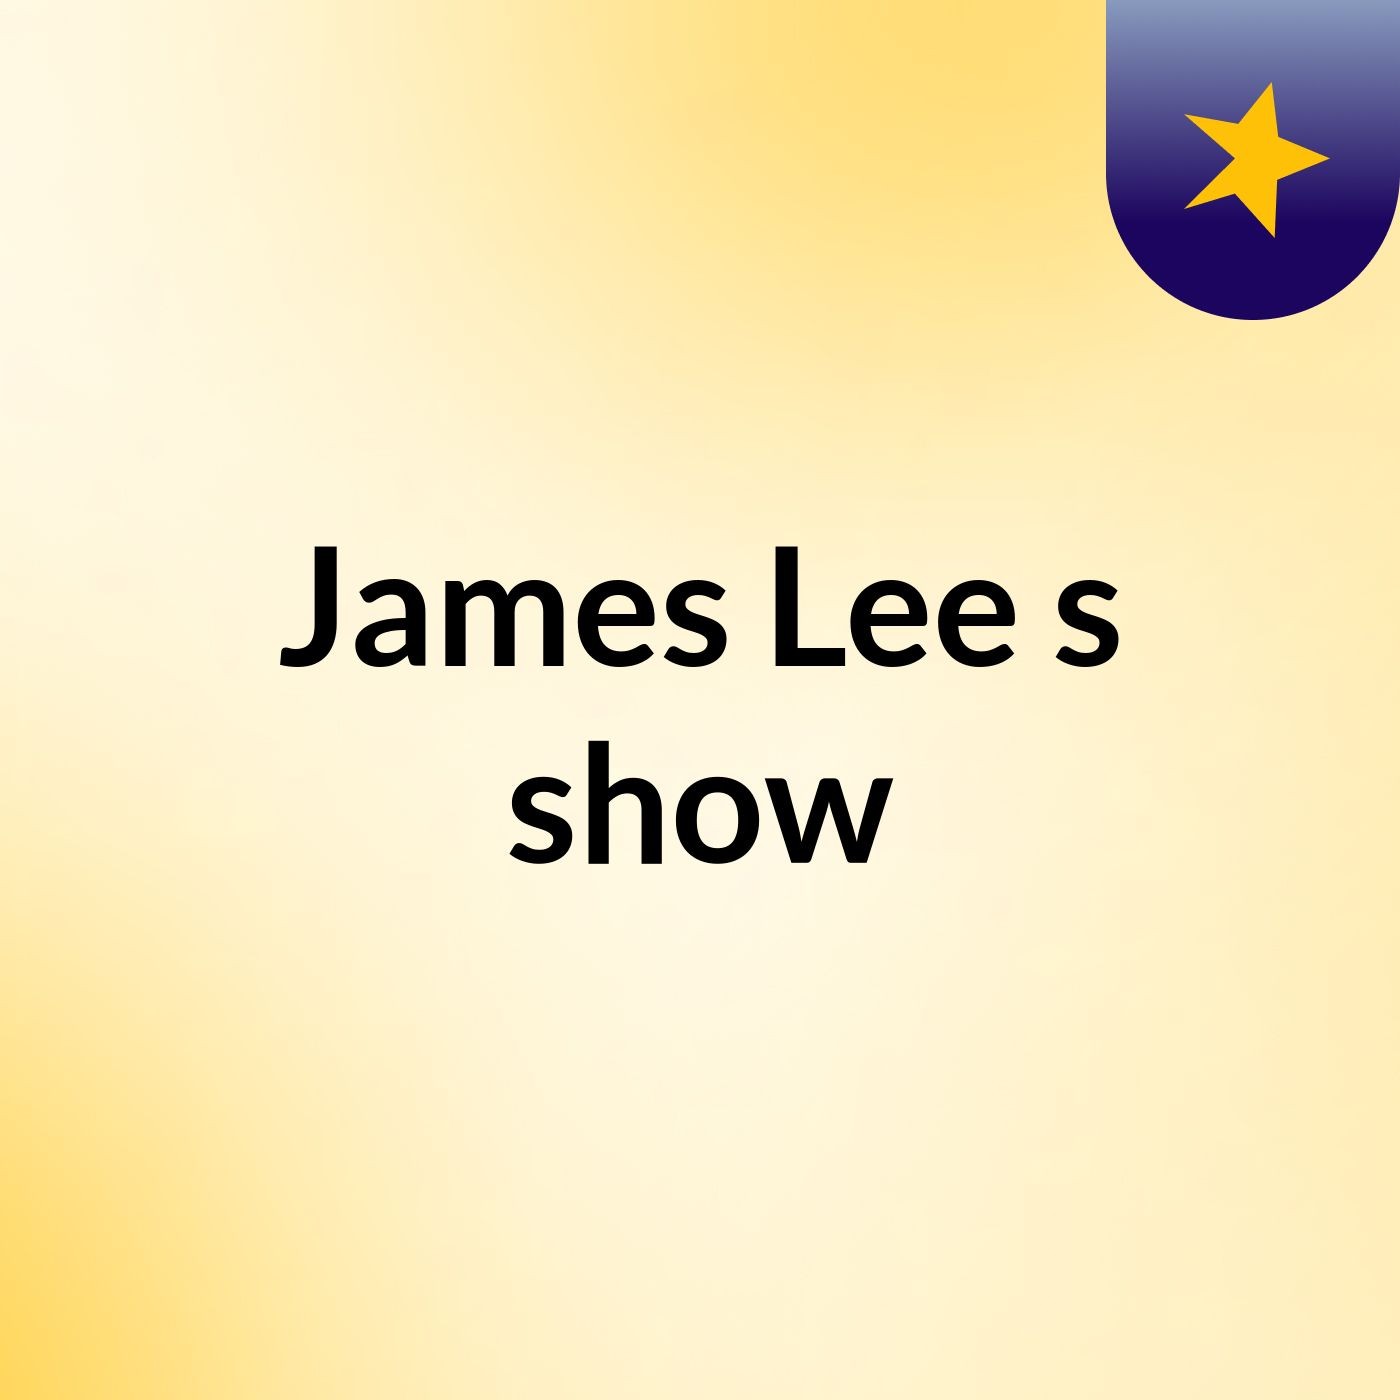 James Lee's show